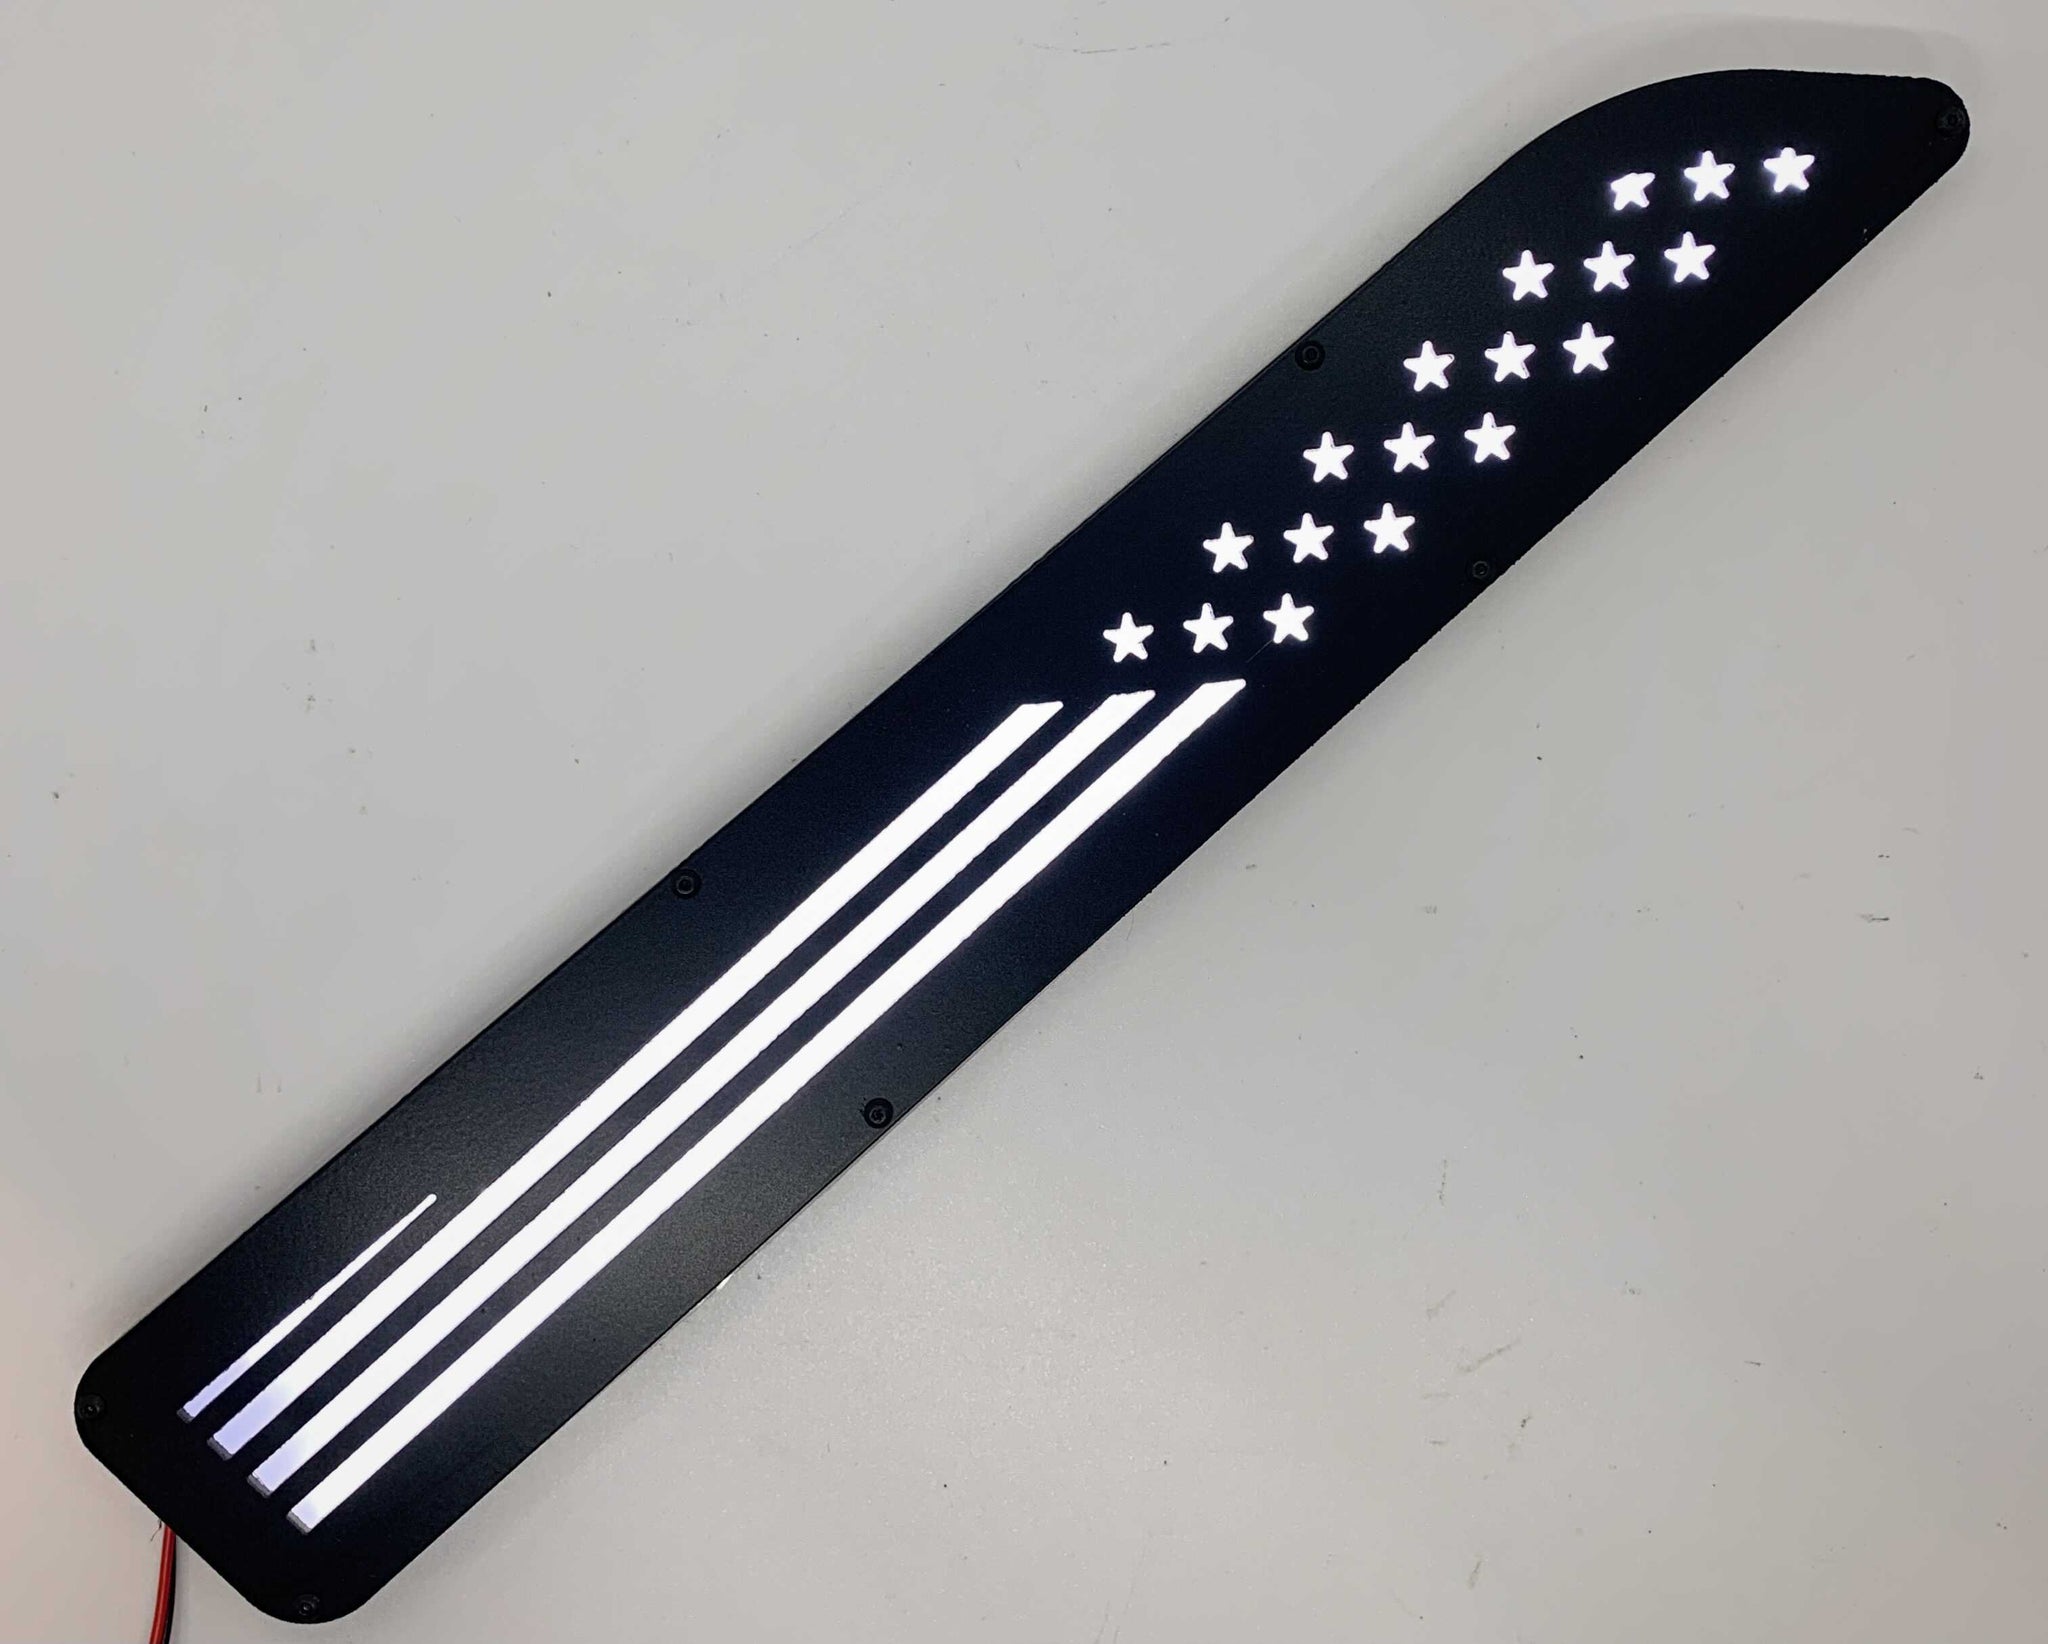 American Flag Hood Badges - Illuminated - Fits 2019-2020 Ram 1500® Sport